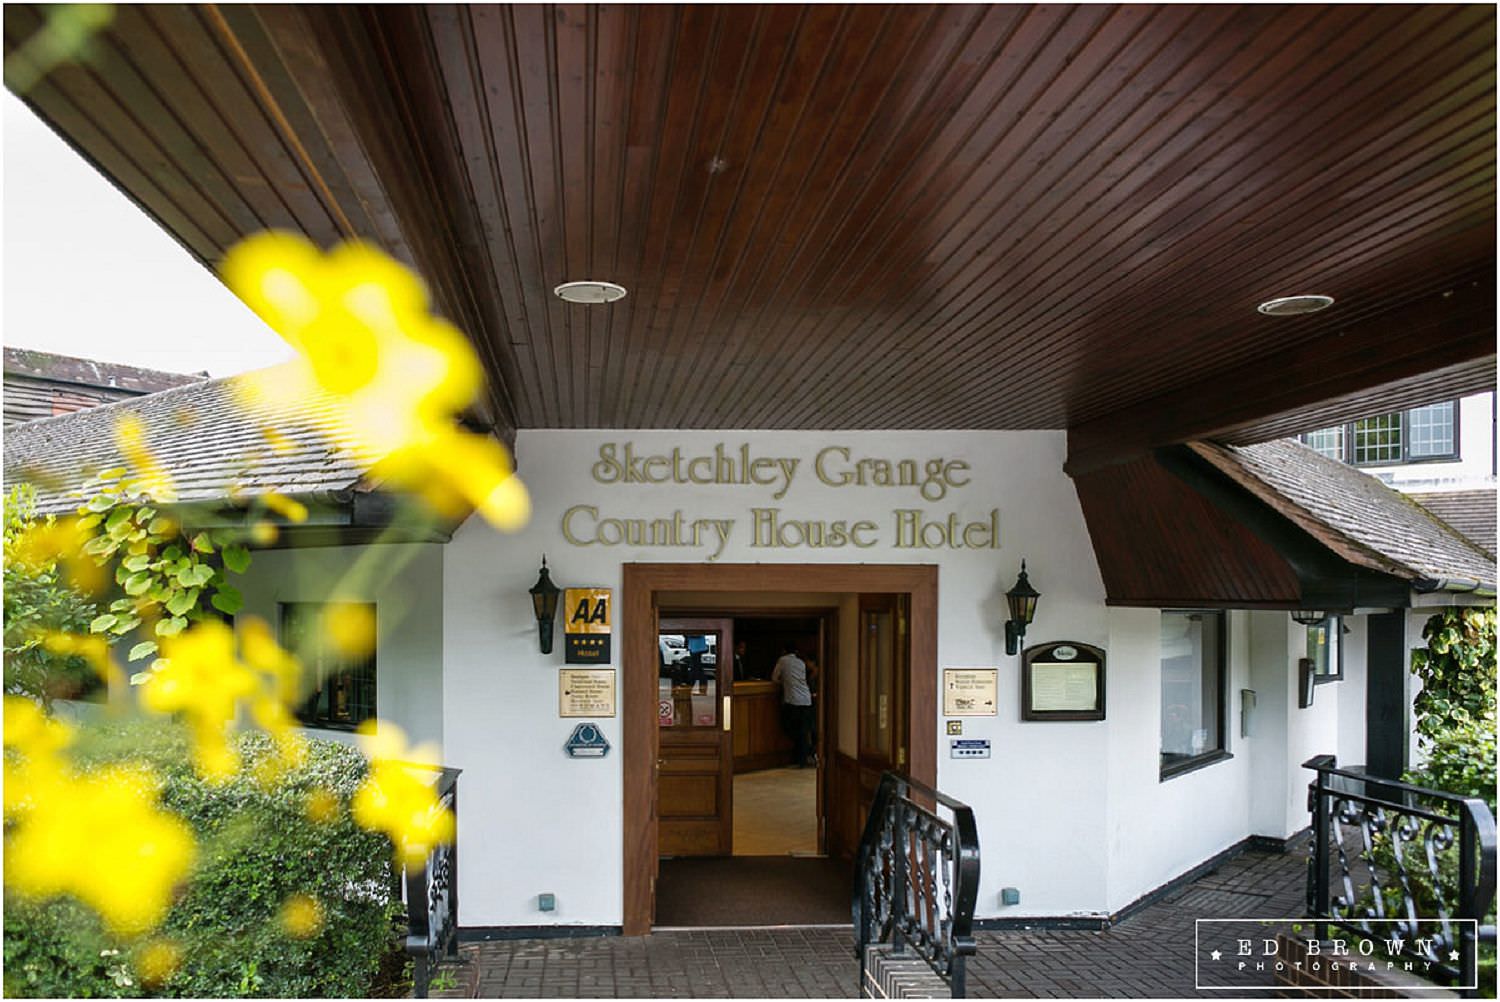 Sketchley-Grange-Open-Day-368.jpg